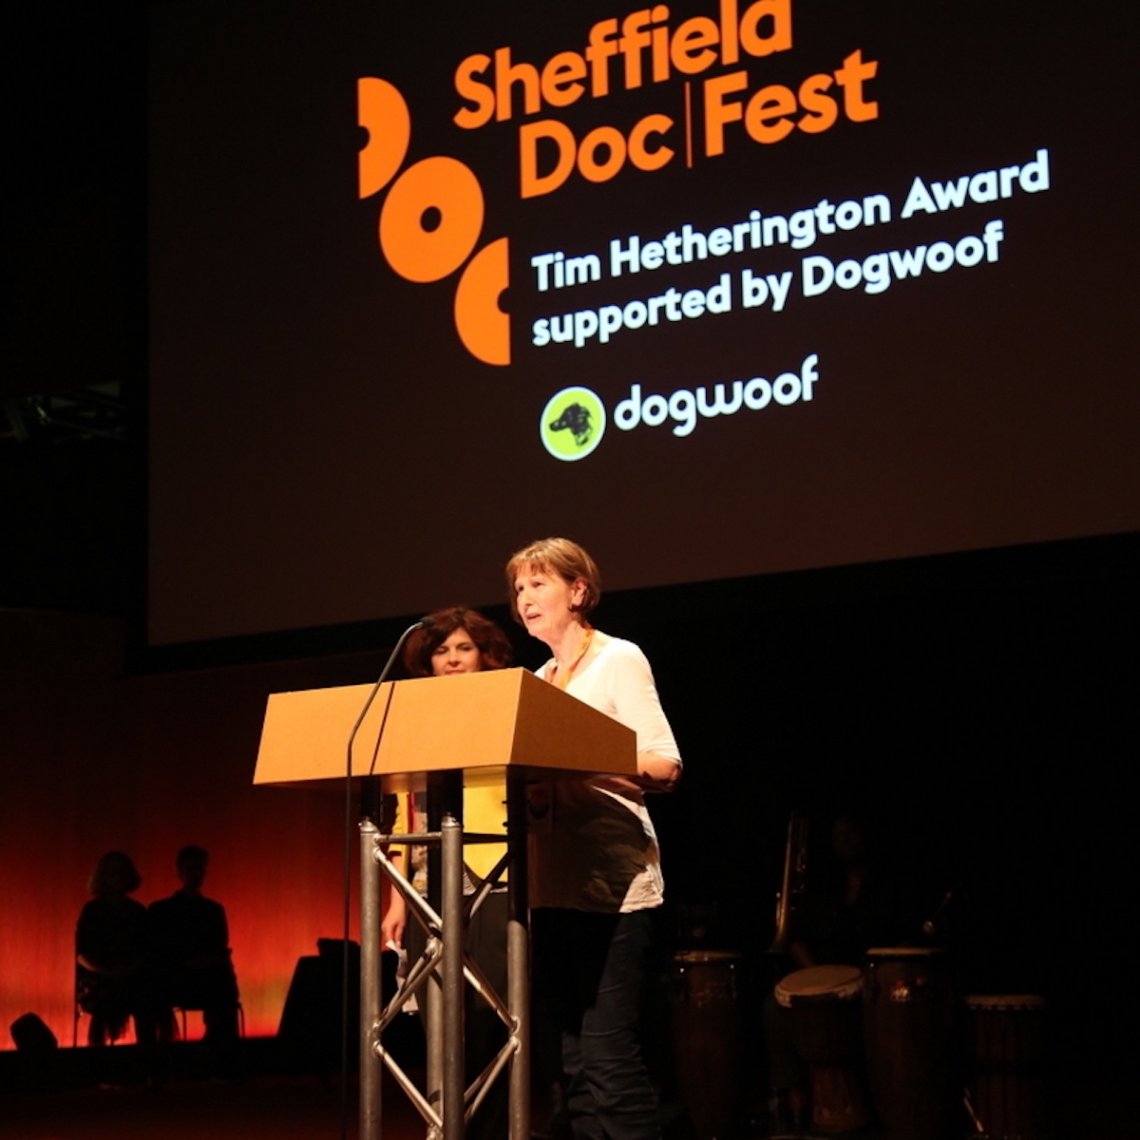 Tim Hetherington Award at Sheffield Documentary Festival 2017